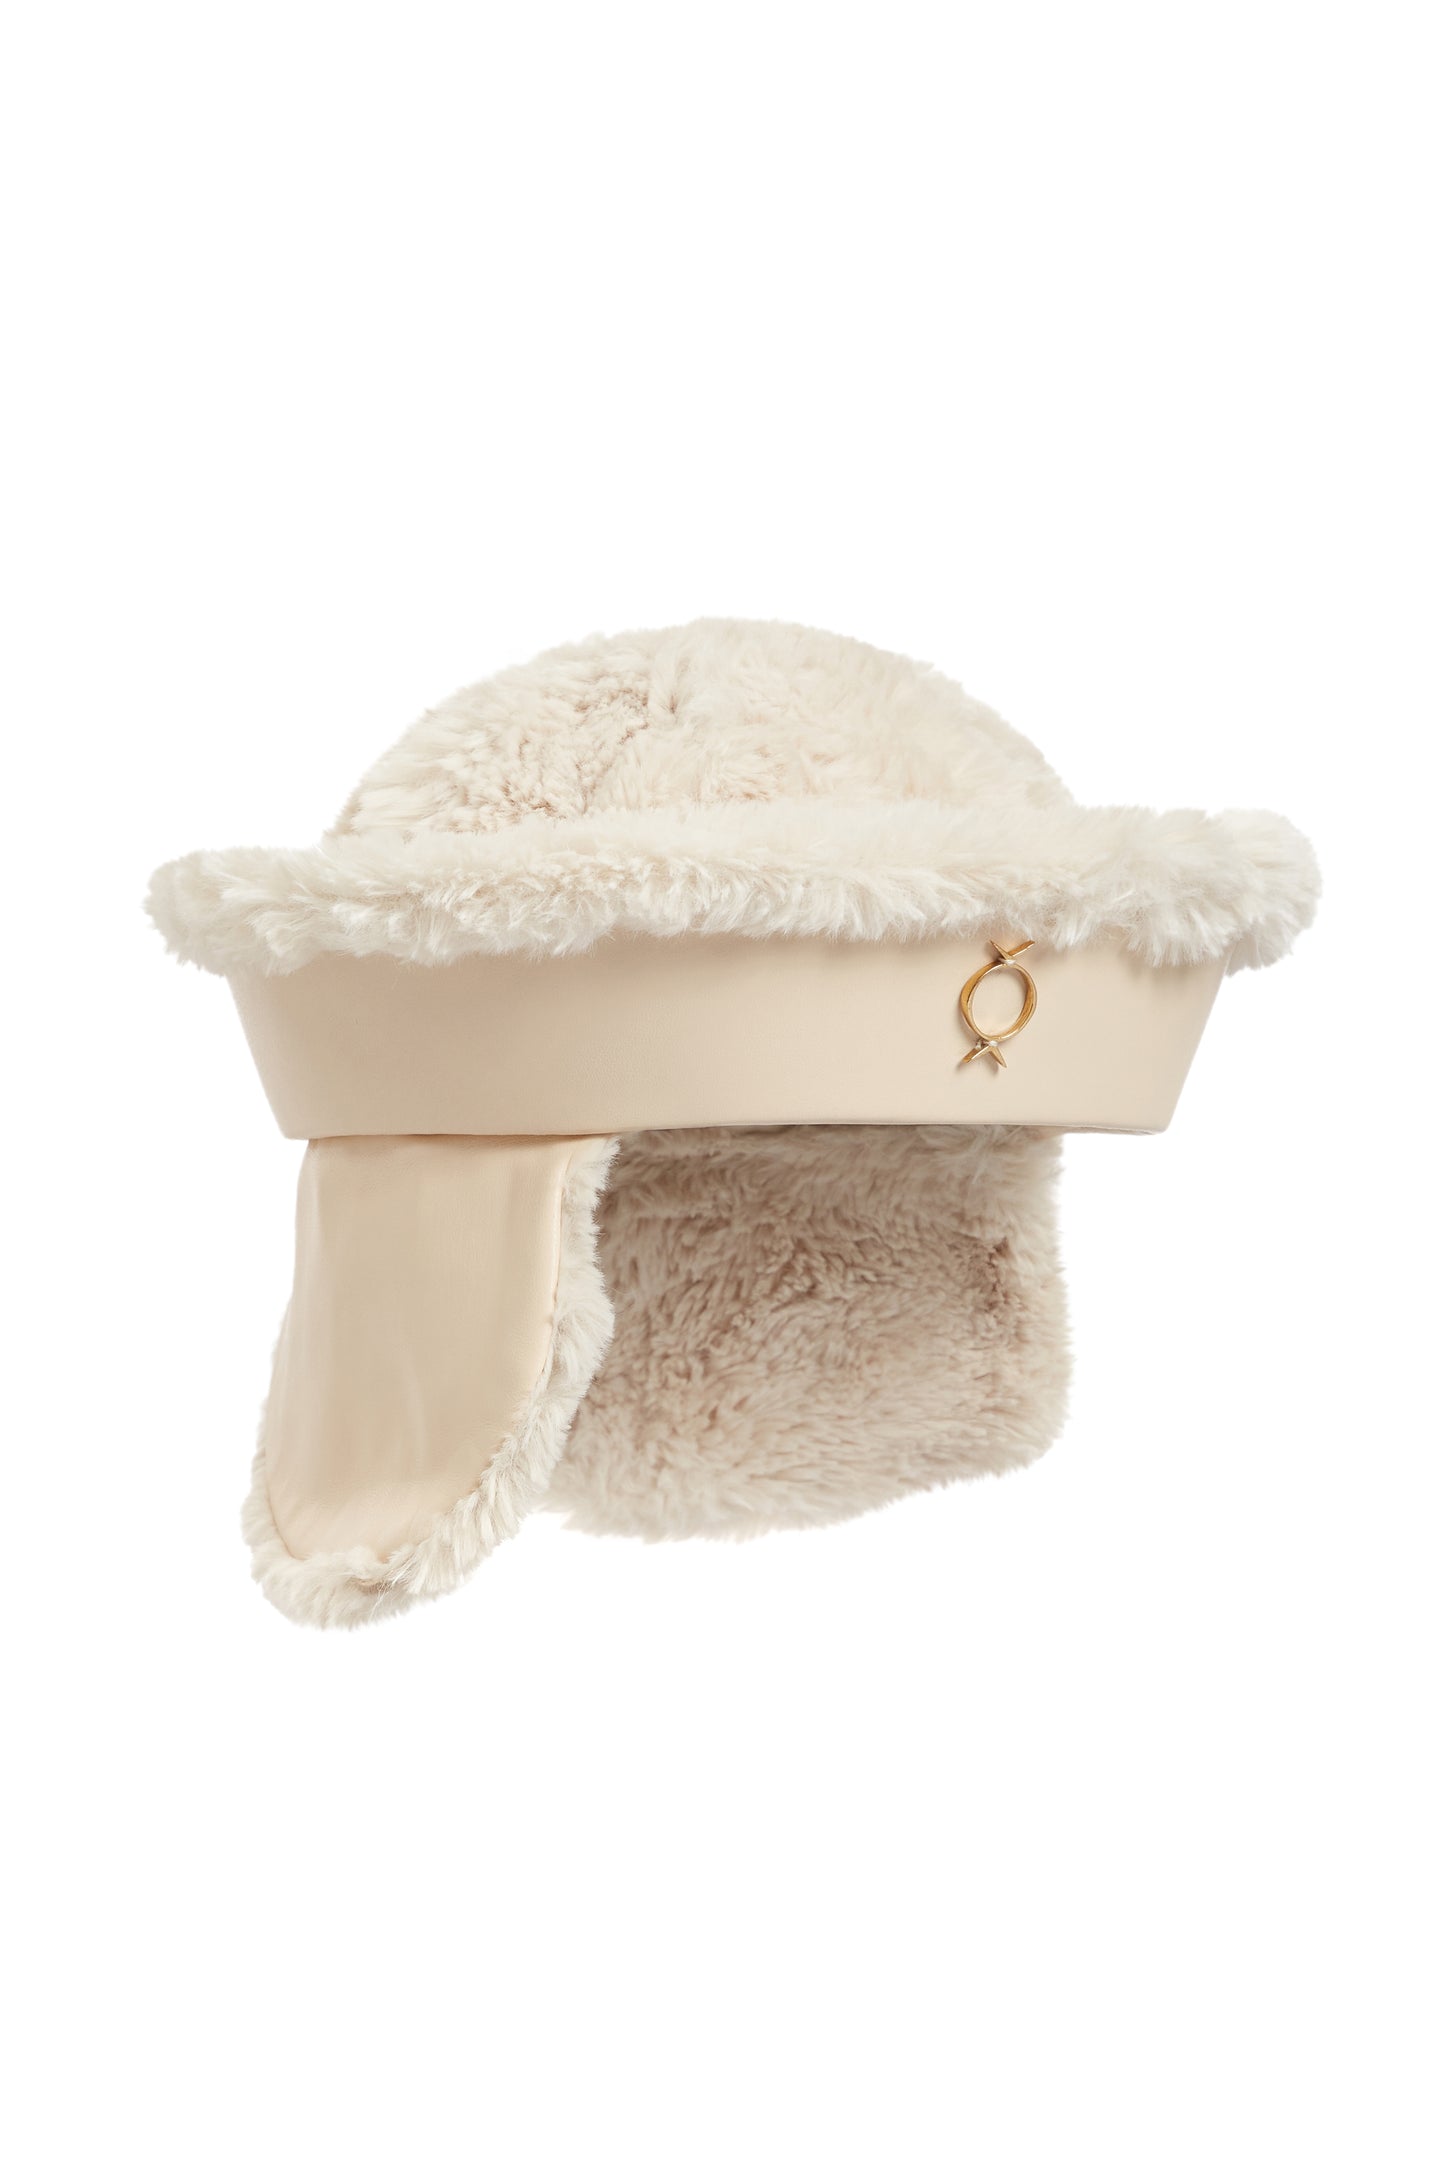 Fluffy Bear With Earmuffs Sea Hat